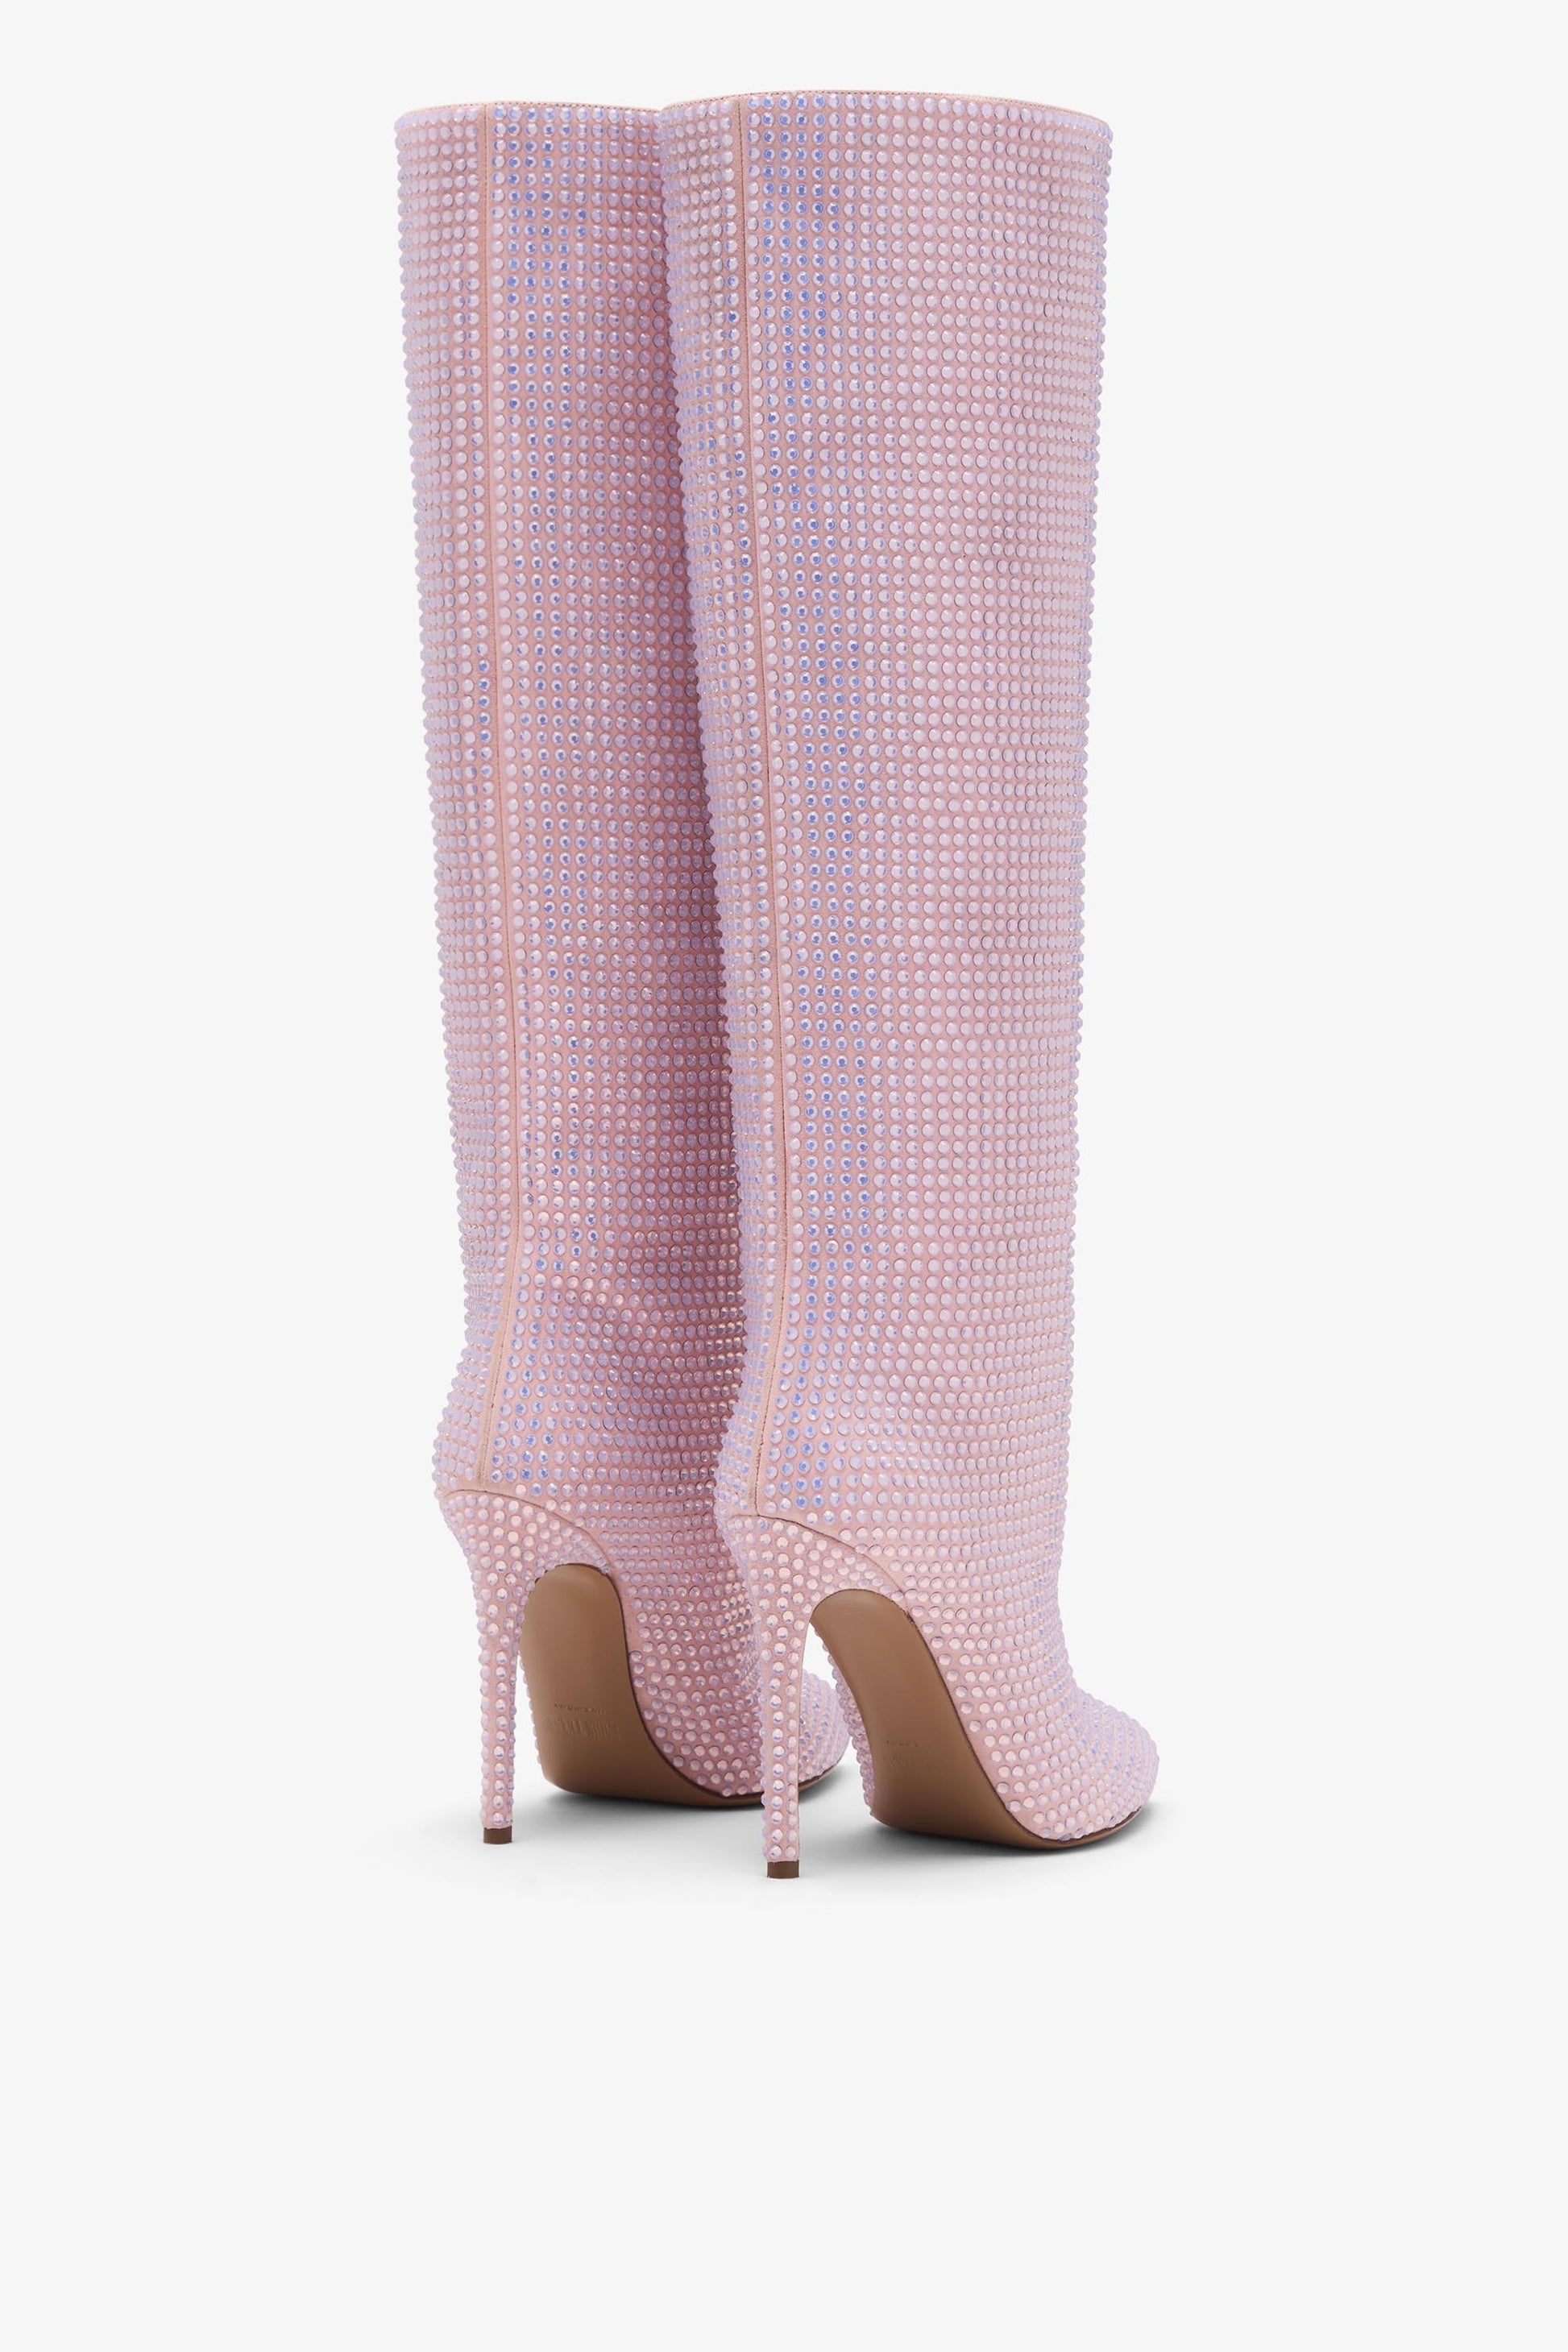 Pink crystal-encrusted suede boot